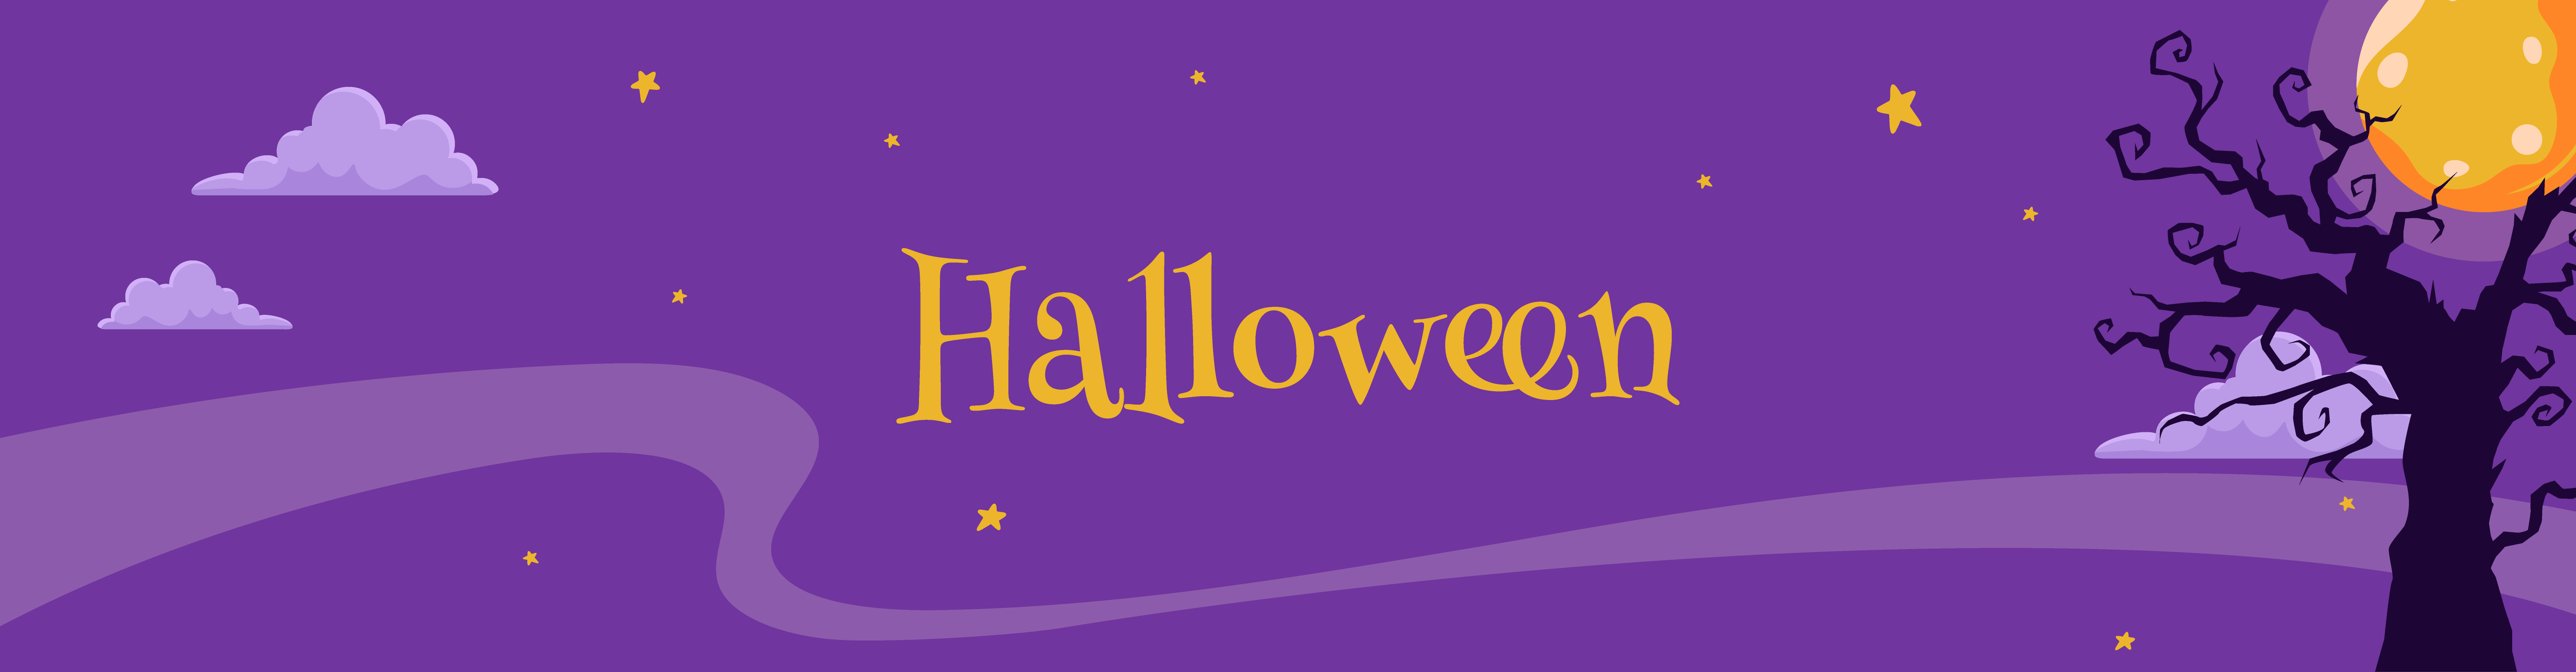 Purple text spelling Halloween in spooky font on a purple sky with stars